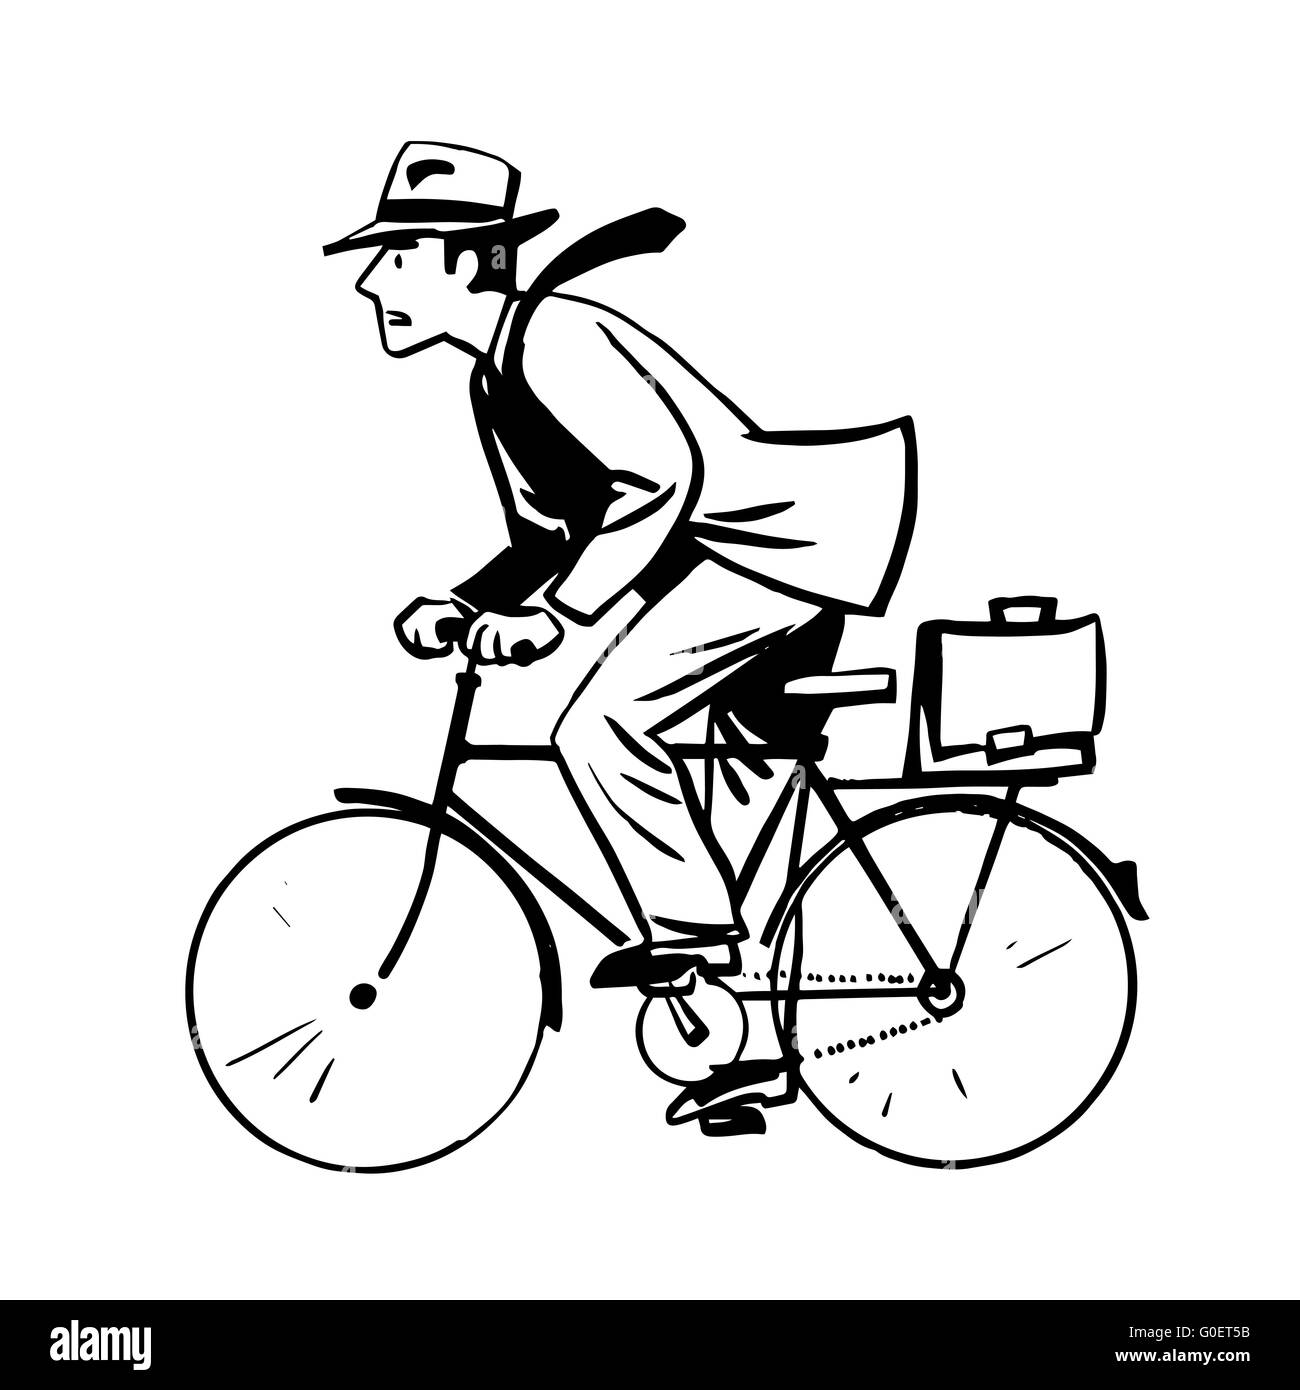 businessman quickly rides Bicycle line art retro sketch Stock Photo